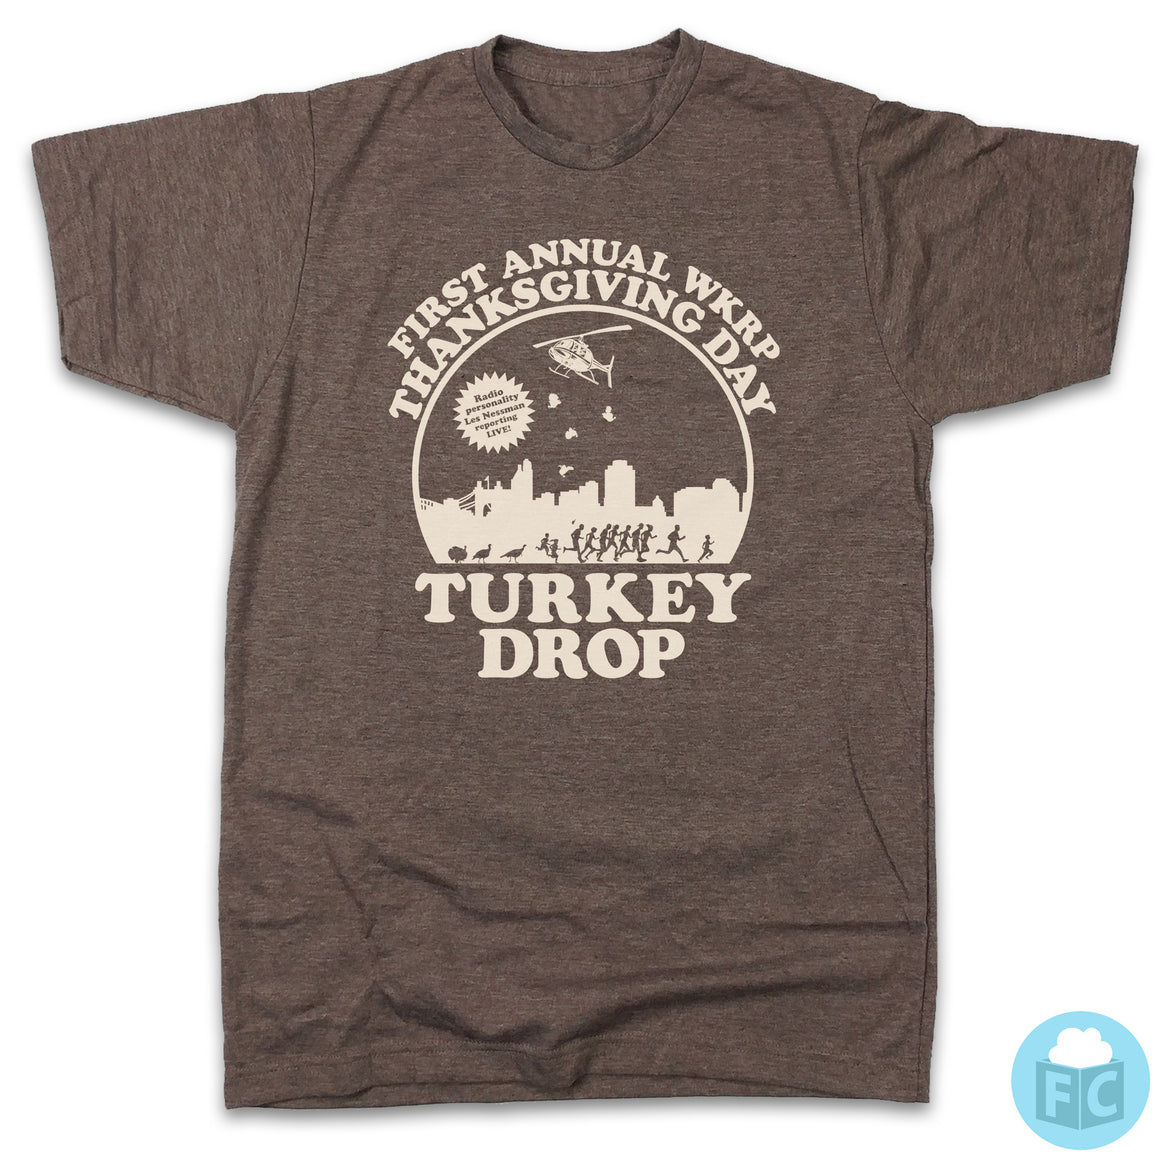 The ORIGINAL WKRP Turkey Drop T-shirt